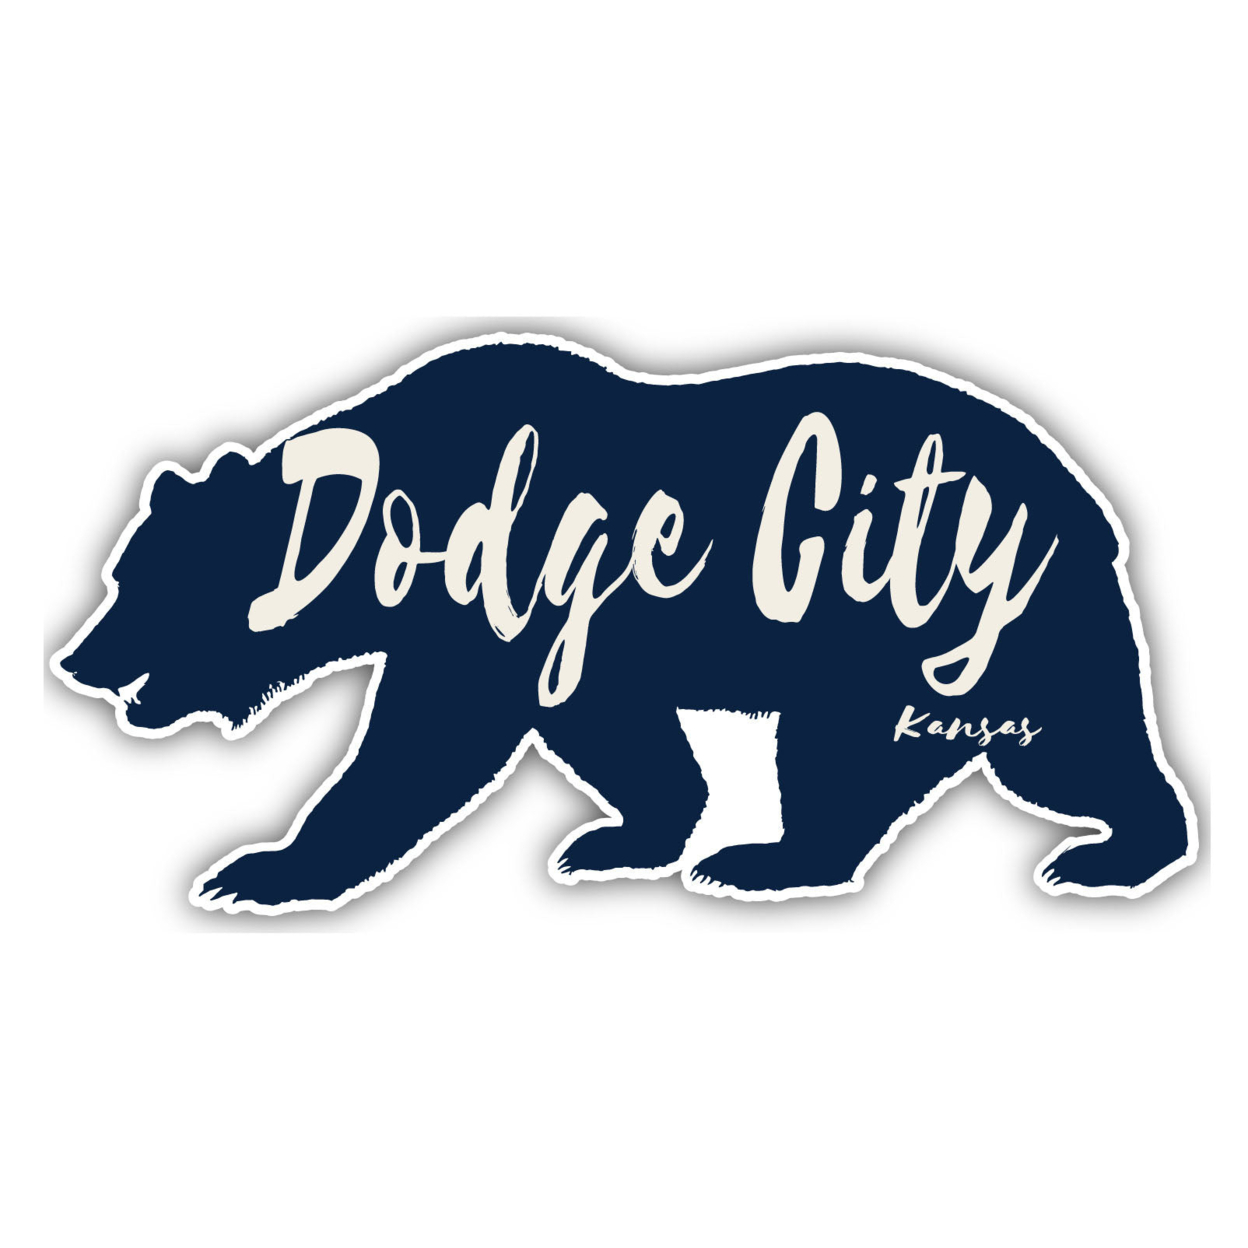 Dodge City Kansas Souvenir Decorative Stickers (Choose Theme And Size) - 4-Pack, 4-Inch, Adventures Awaits